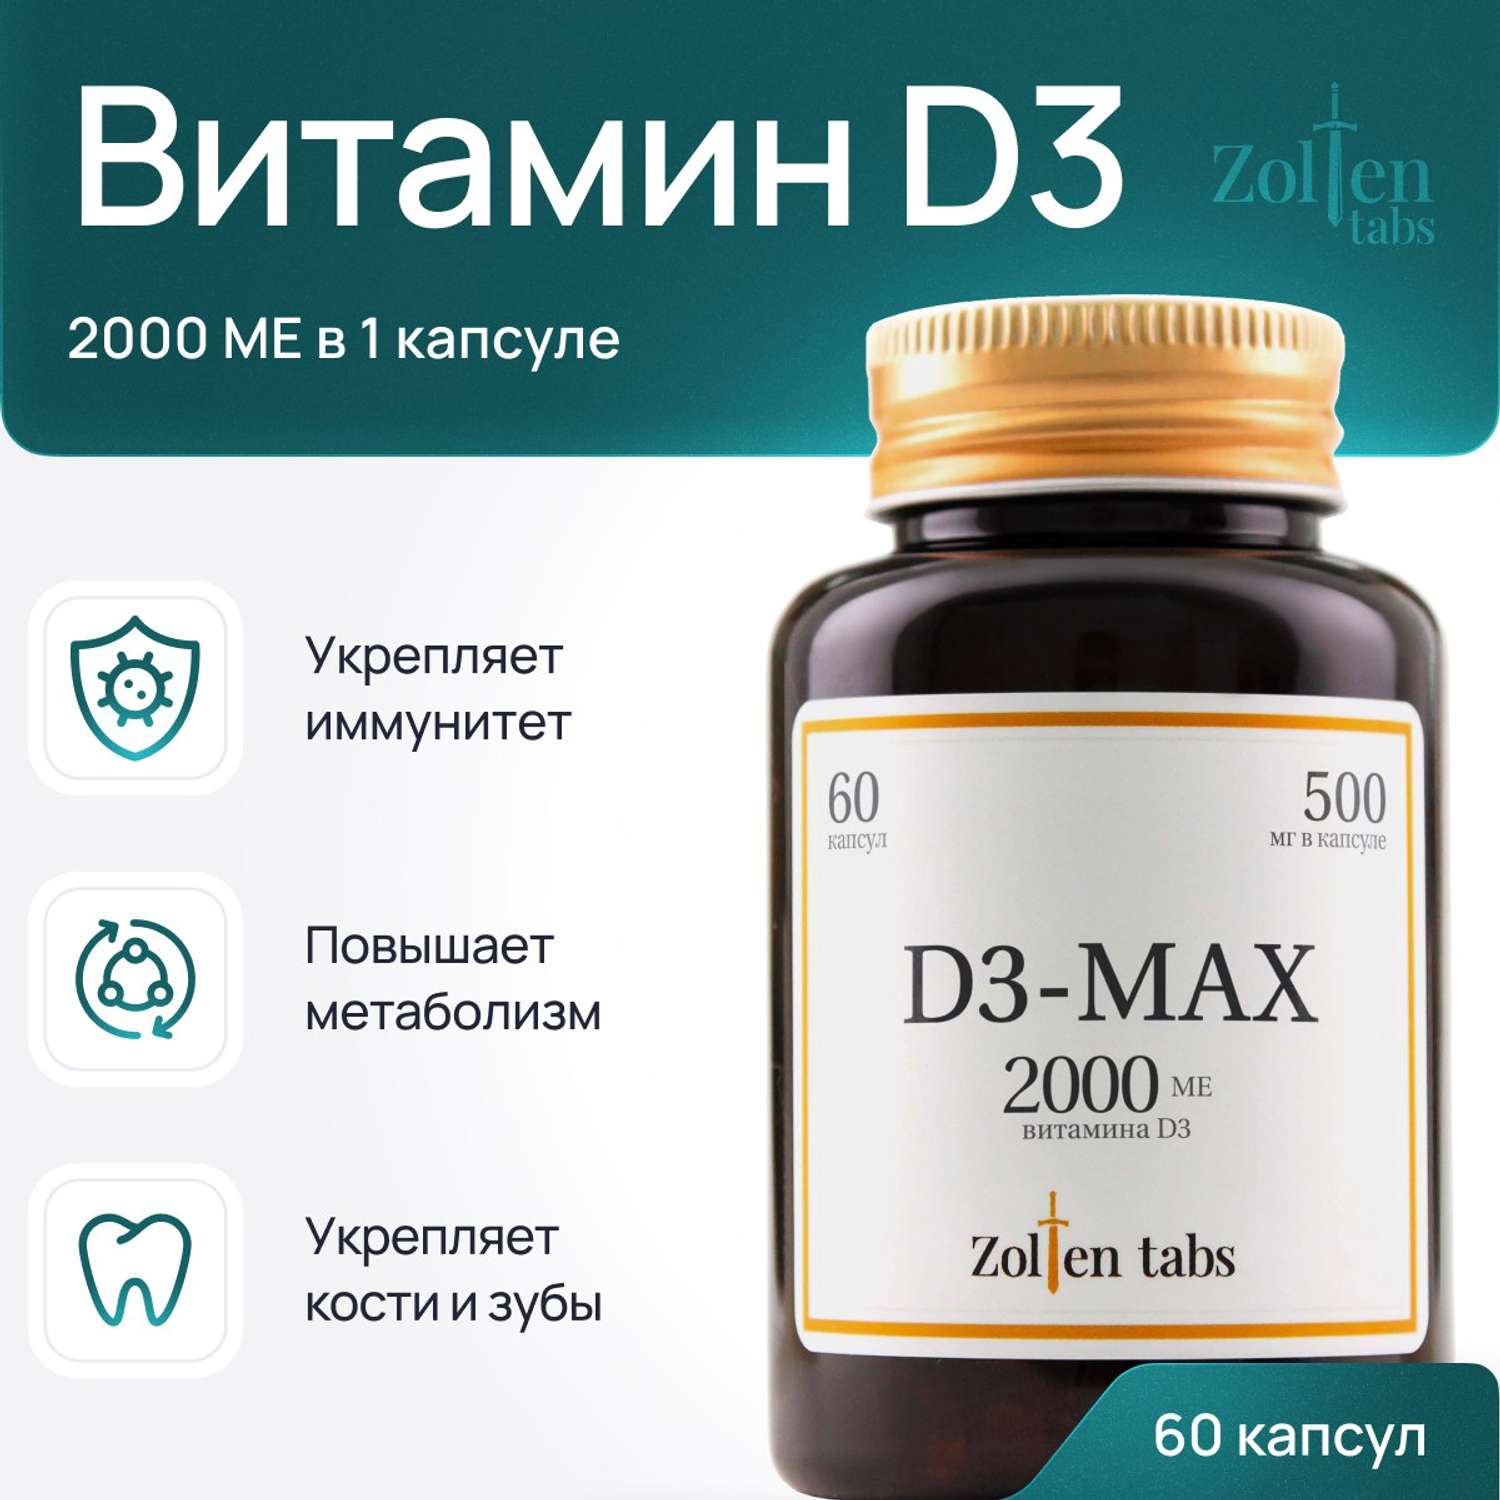 Витамин д3 2000 МЕ Zolten Tabs витаминный комплекс для женщин и мужчин 60 капсул - фото 1